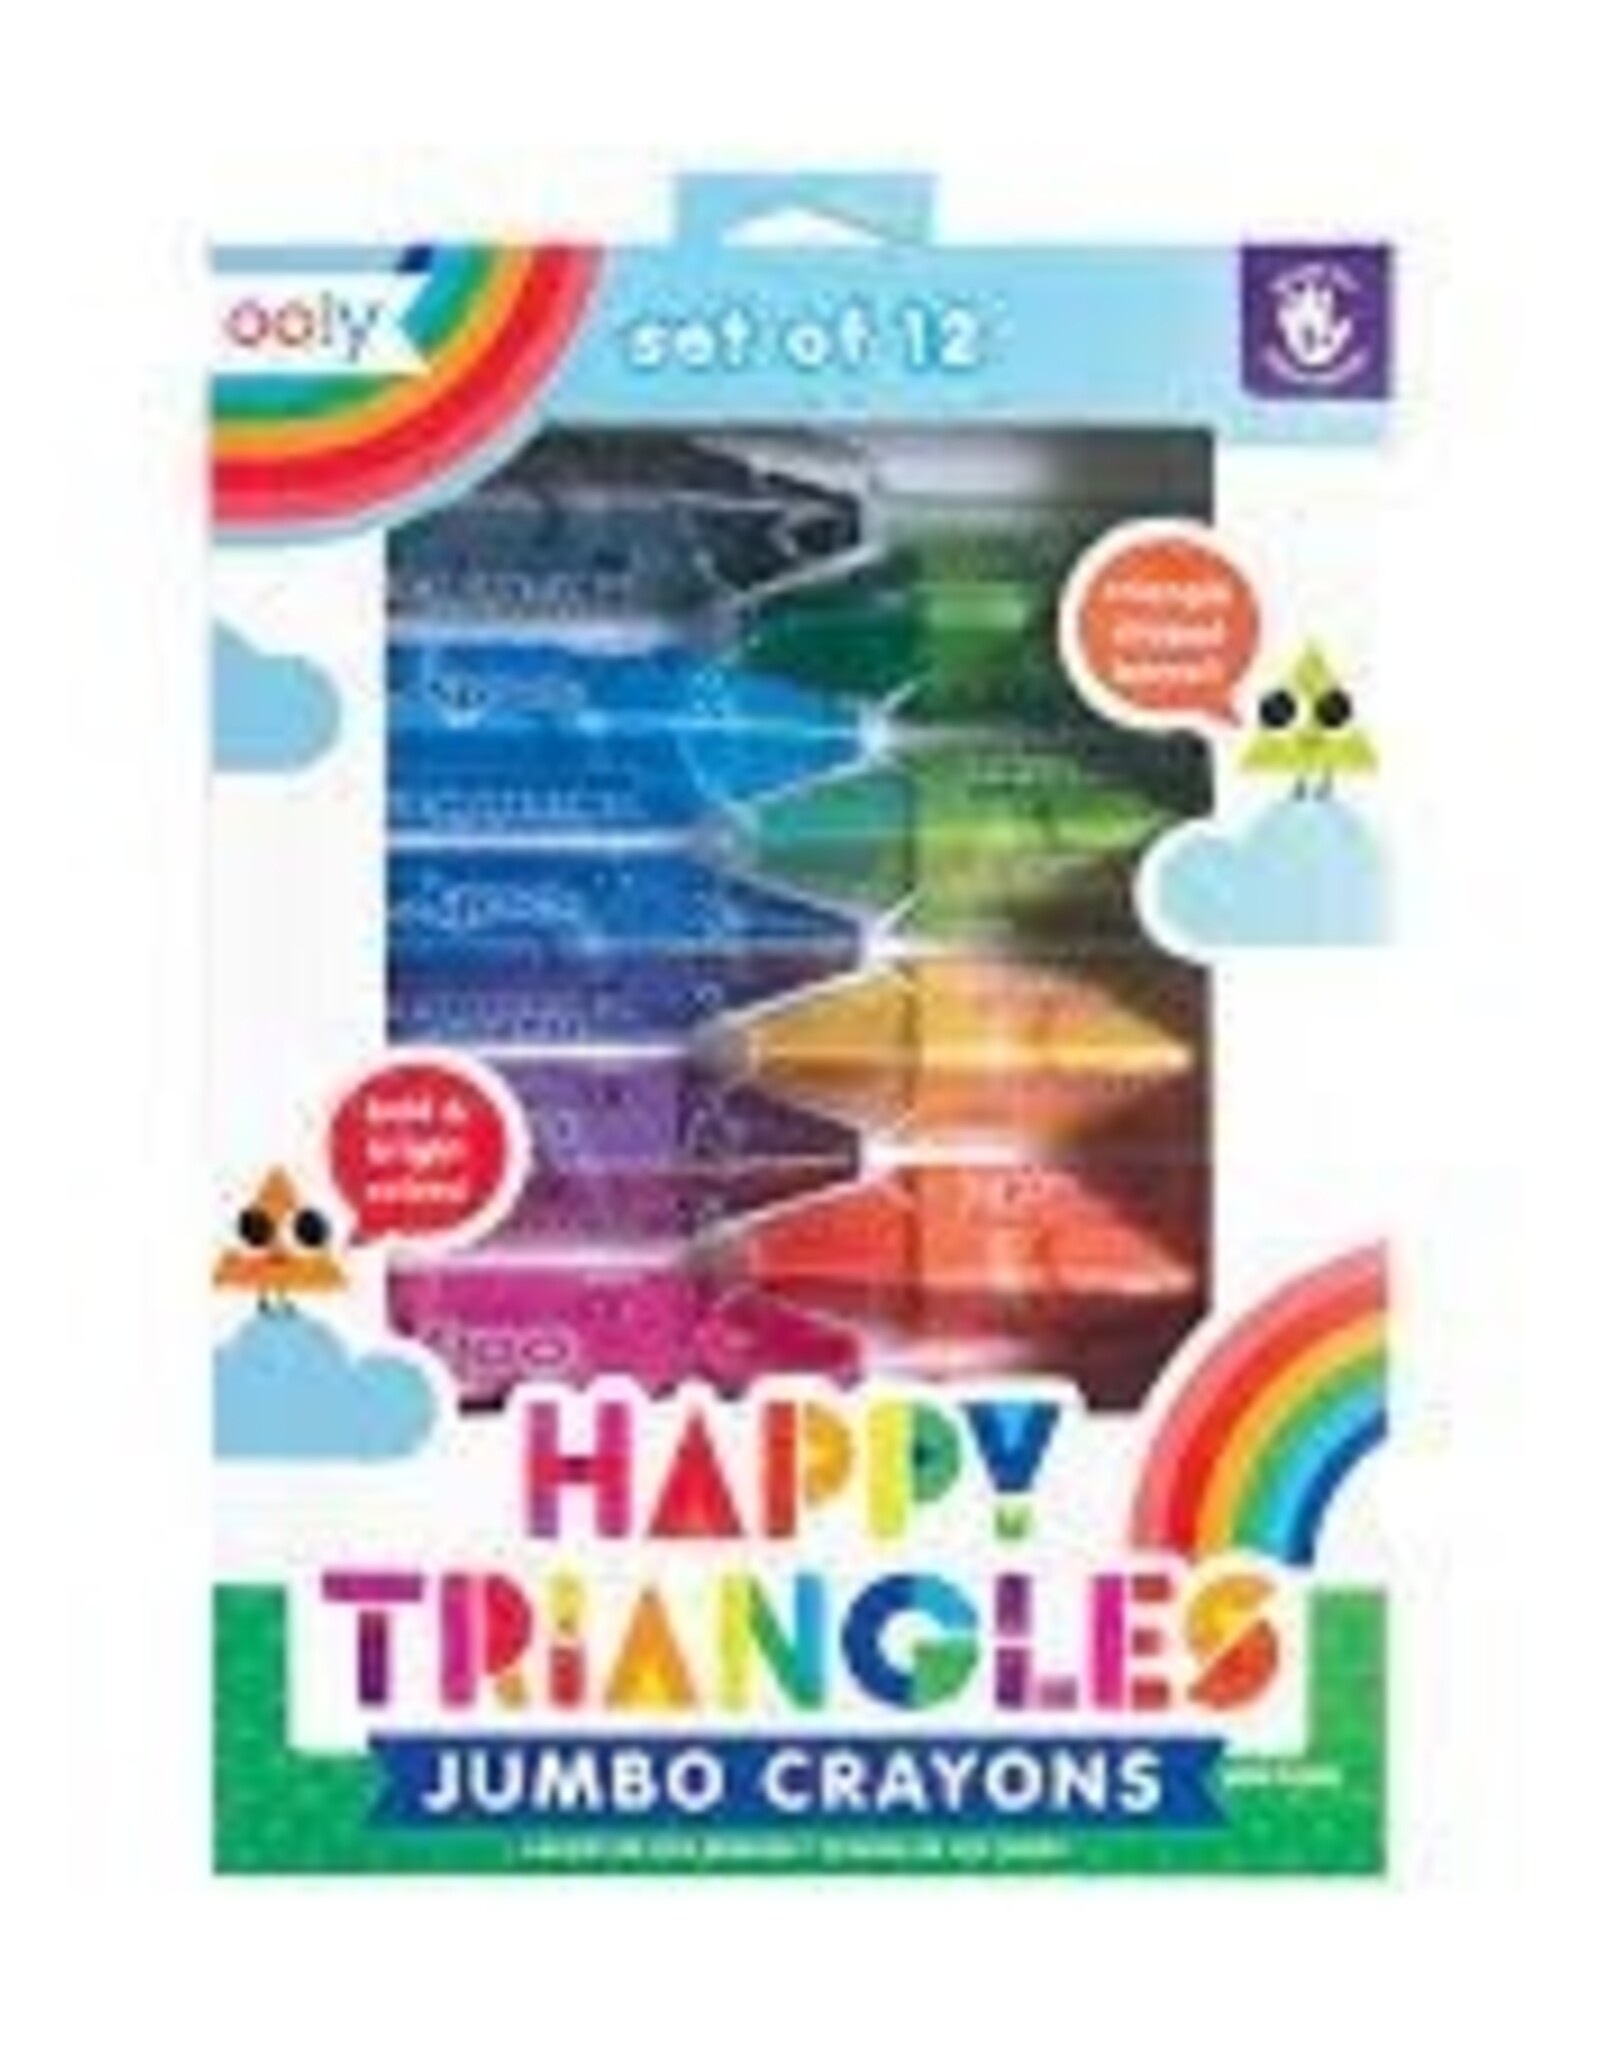 OOLY HAPPY TRIANGLES JUMBO CRAYONS - SET OF 12